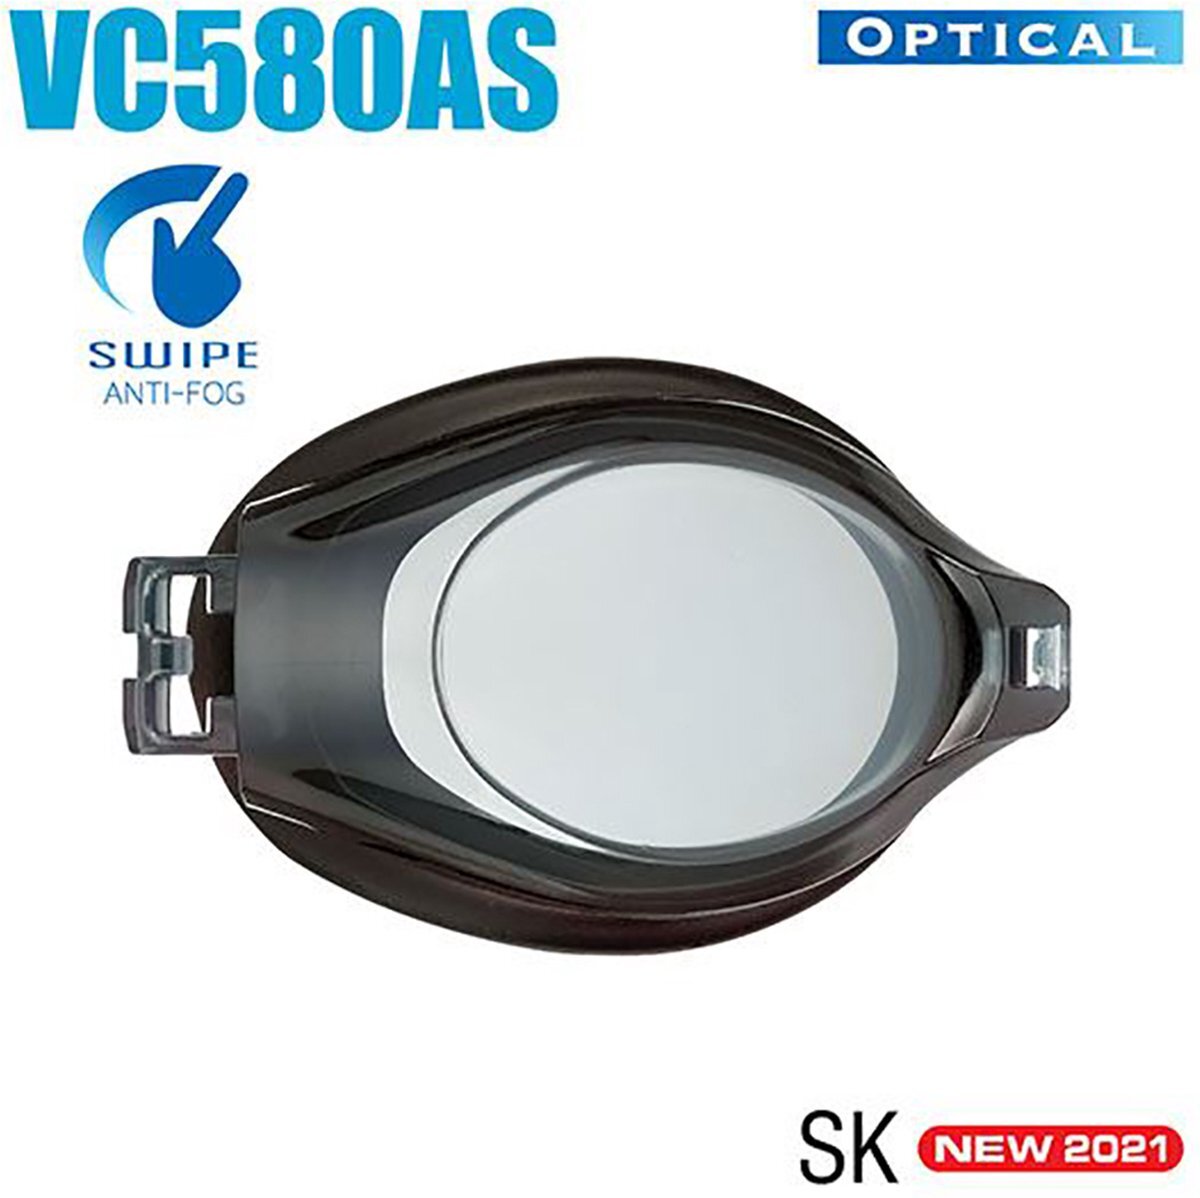 View zwembril lens met SWIPE technologie VC580AS Sterkte +2.5 kleur zwart